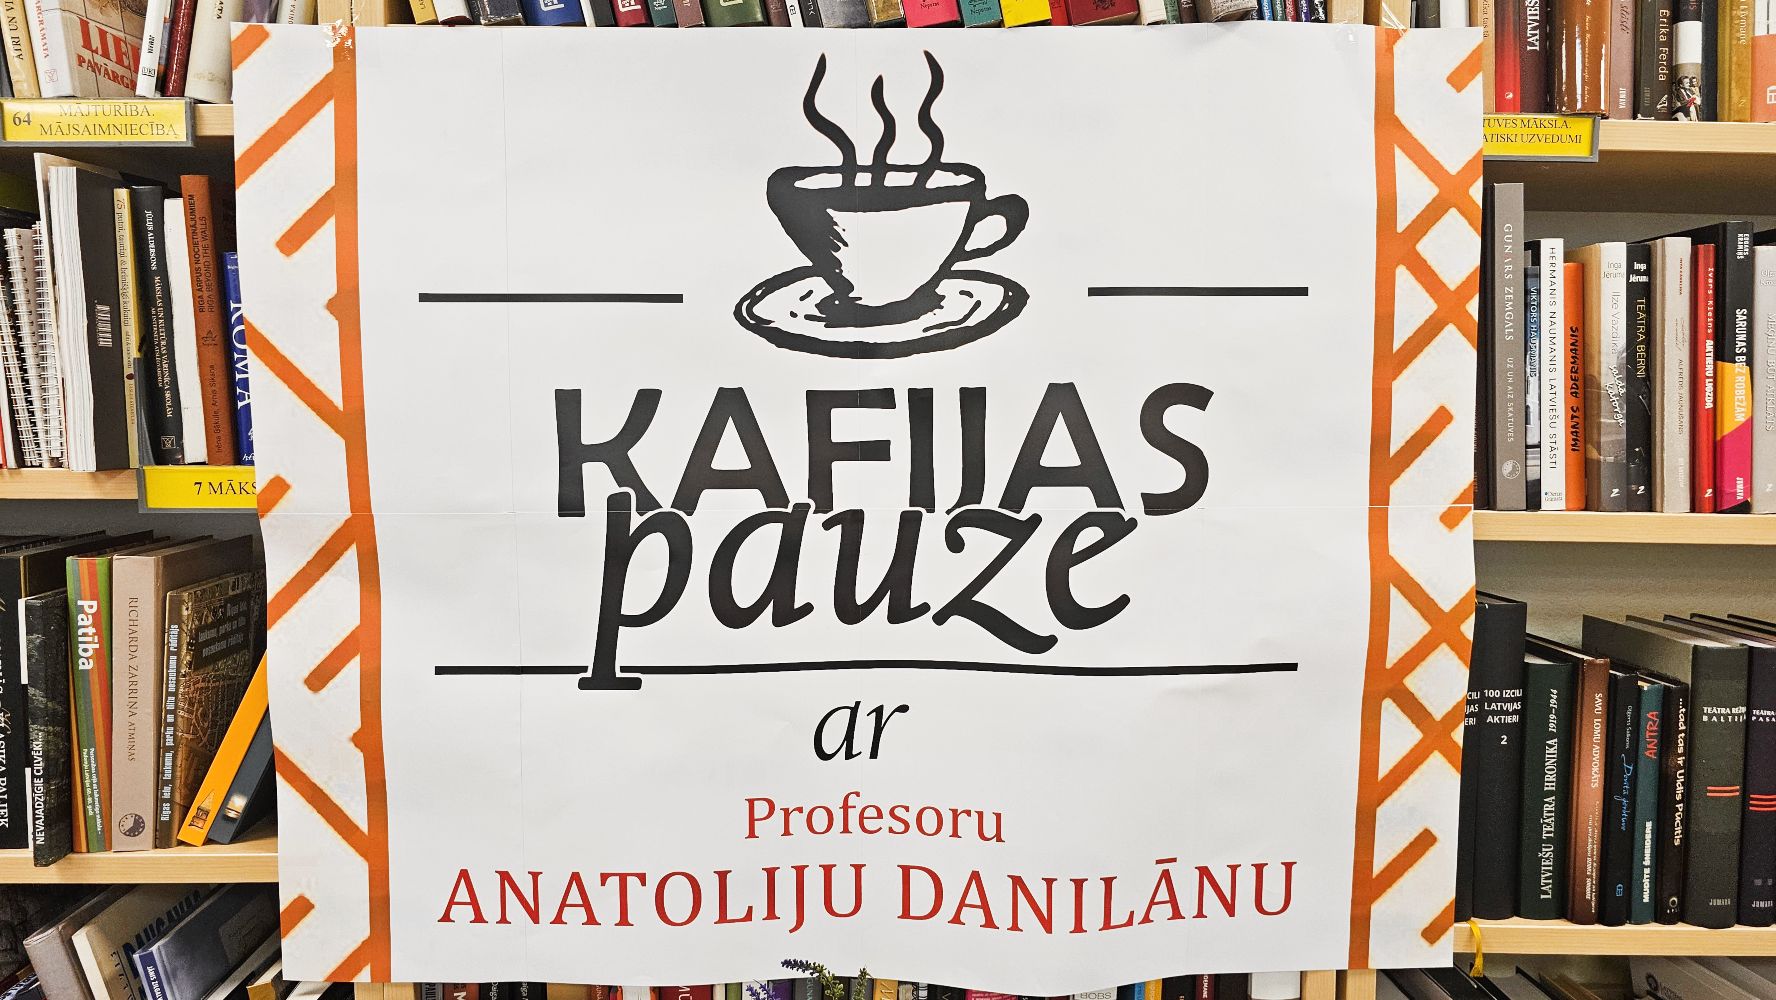 Kafijas pauzes logo